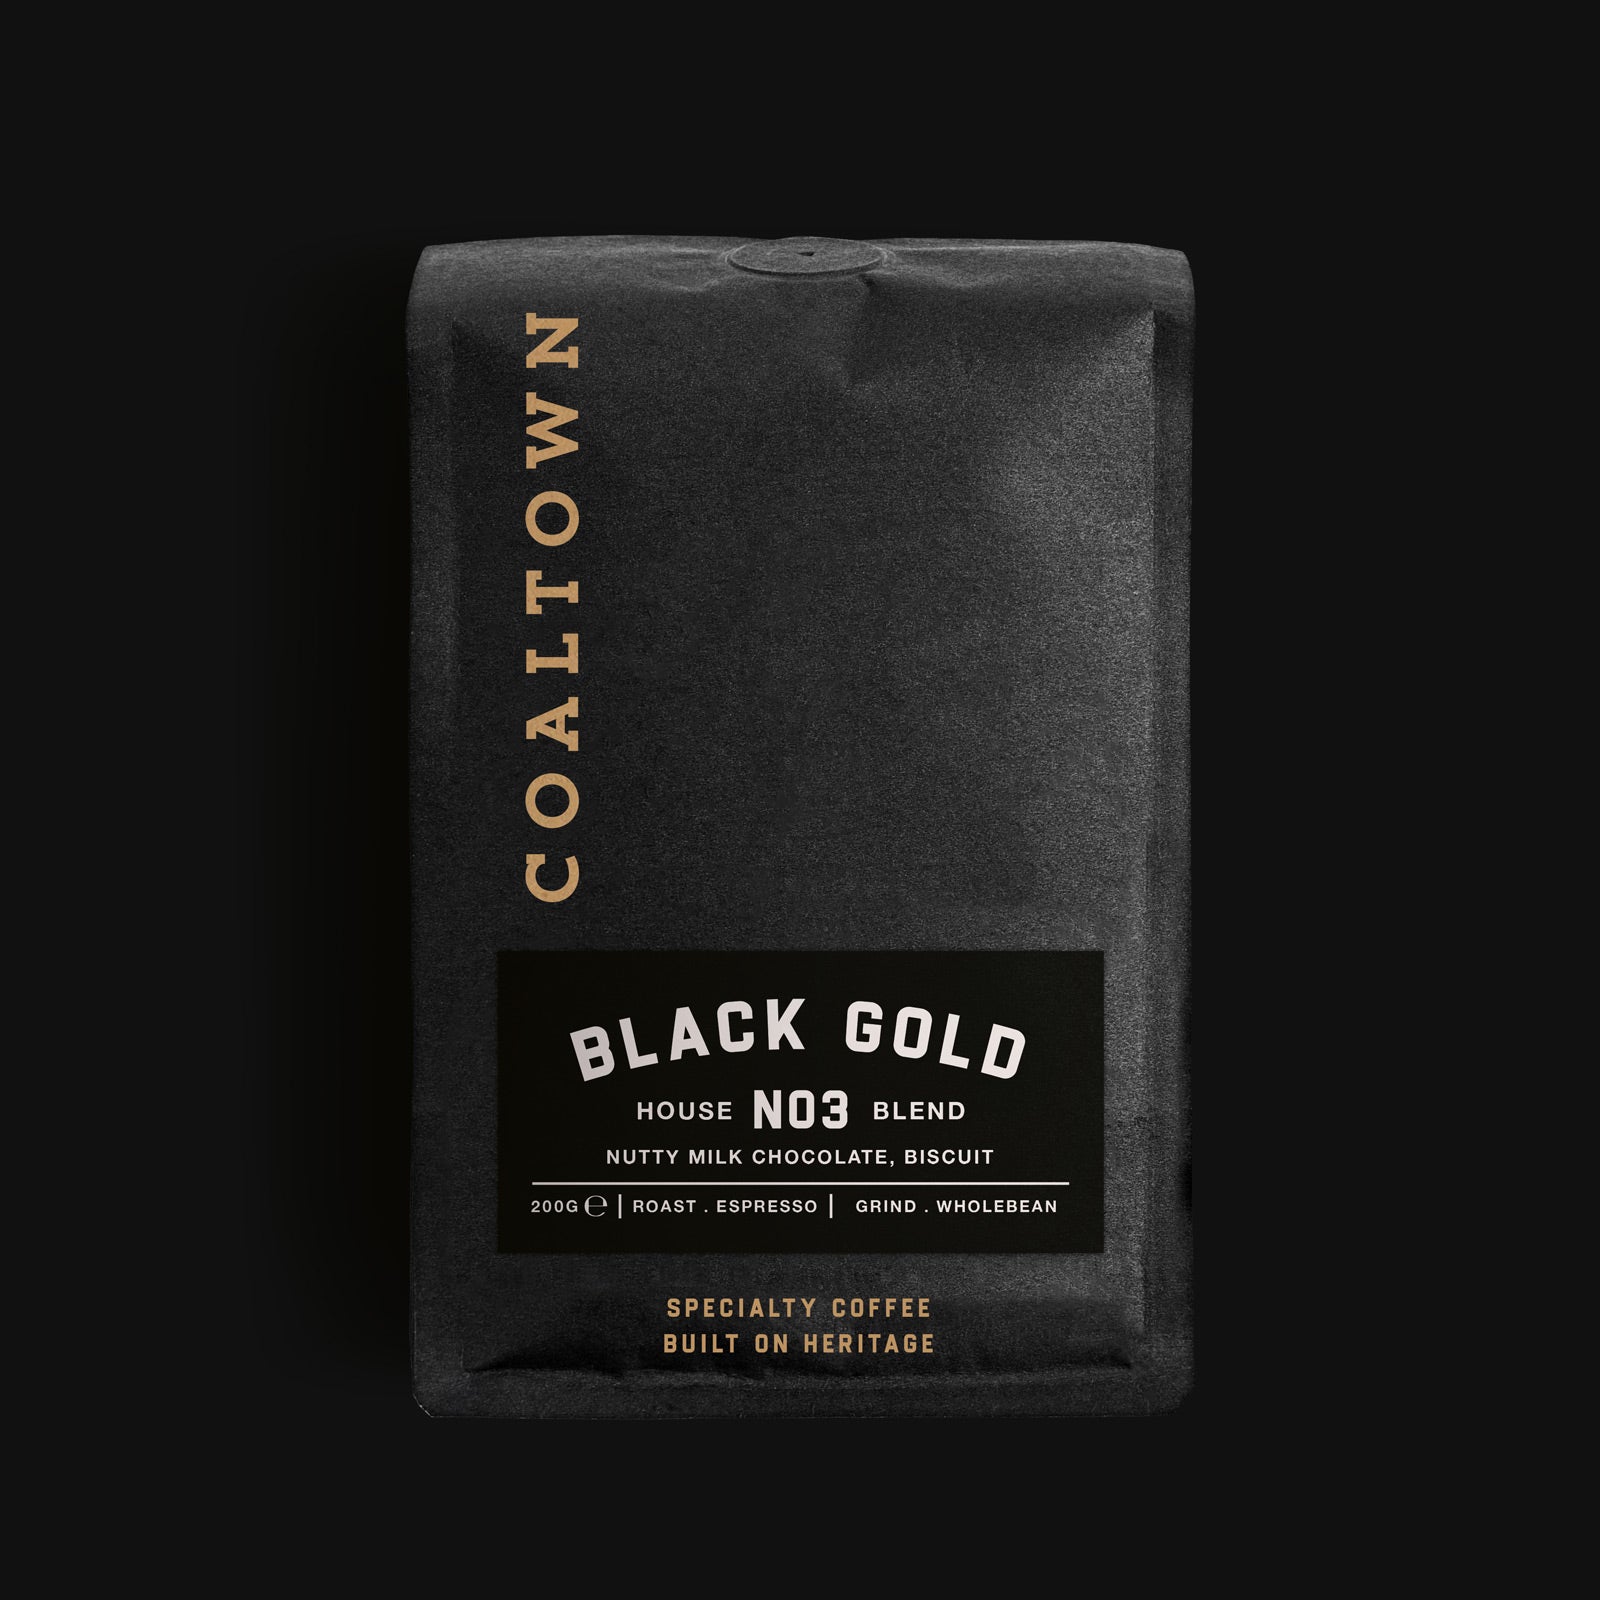 Black-Gold-no3-House-Bland-Coffee-200g-Bag